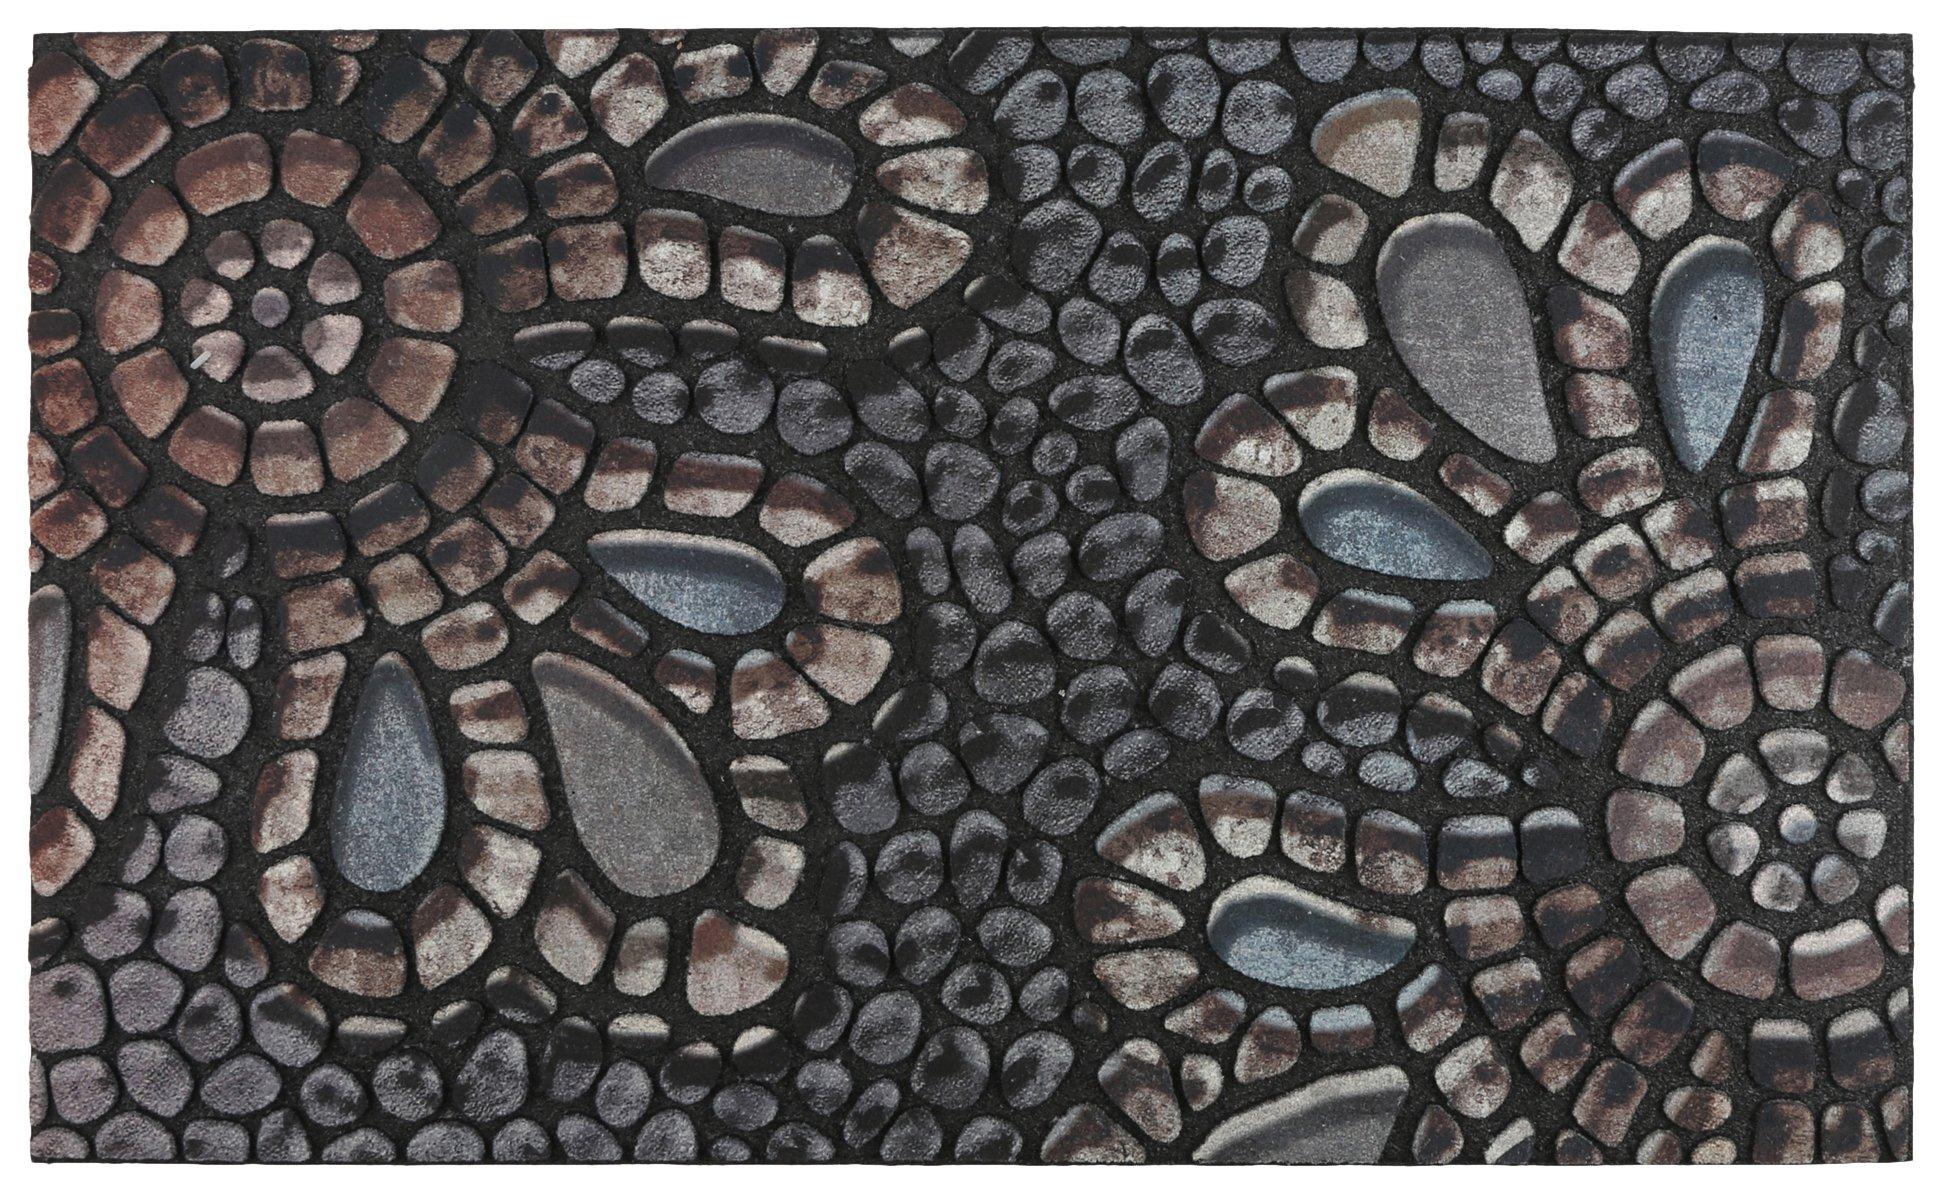 Floral Mosaic Rubber Doormat